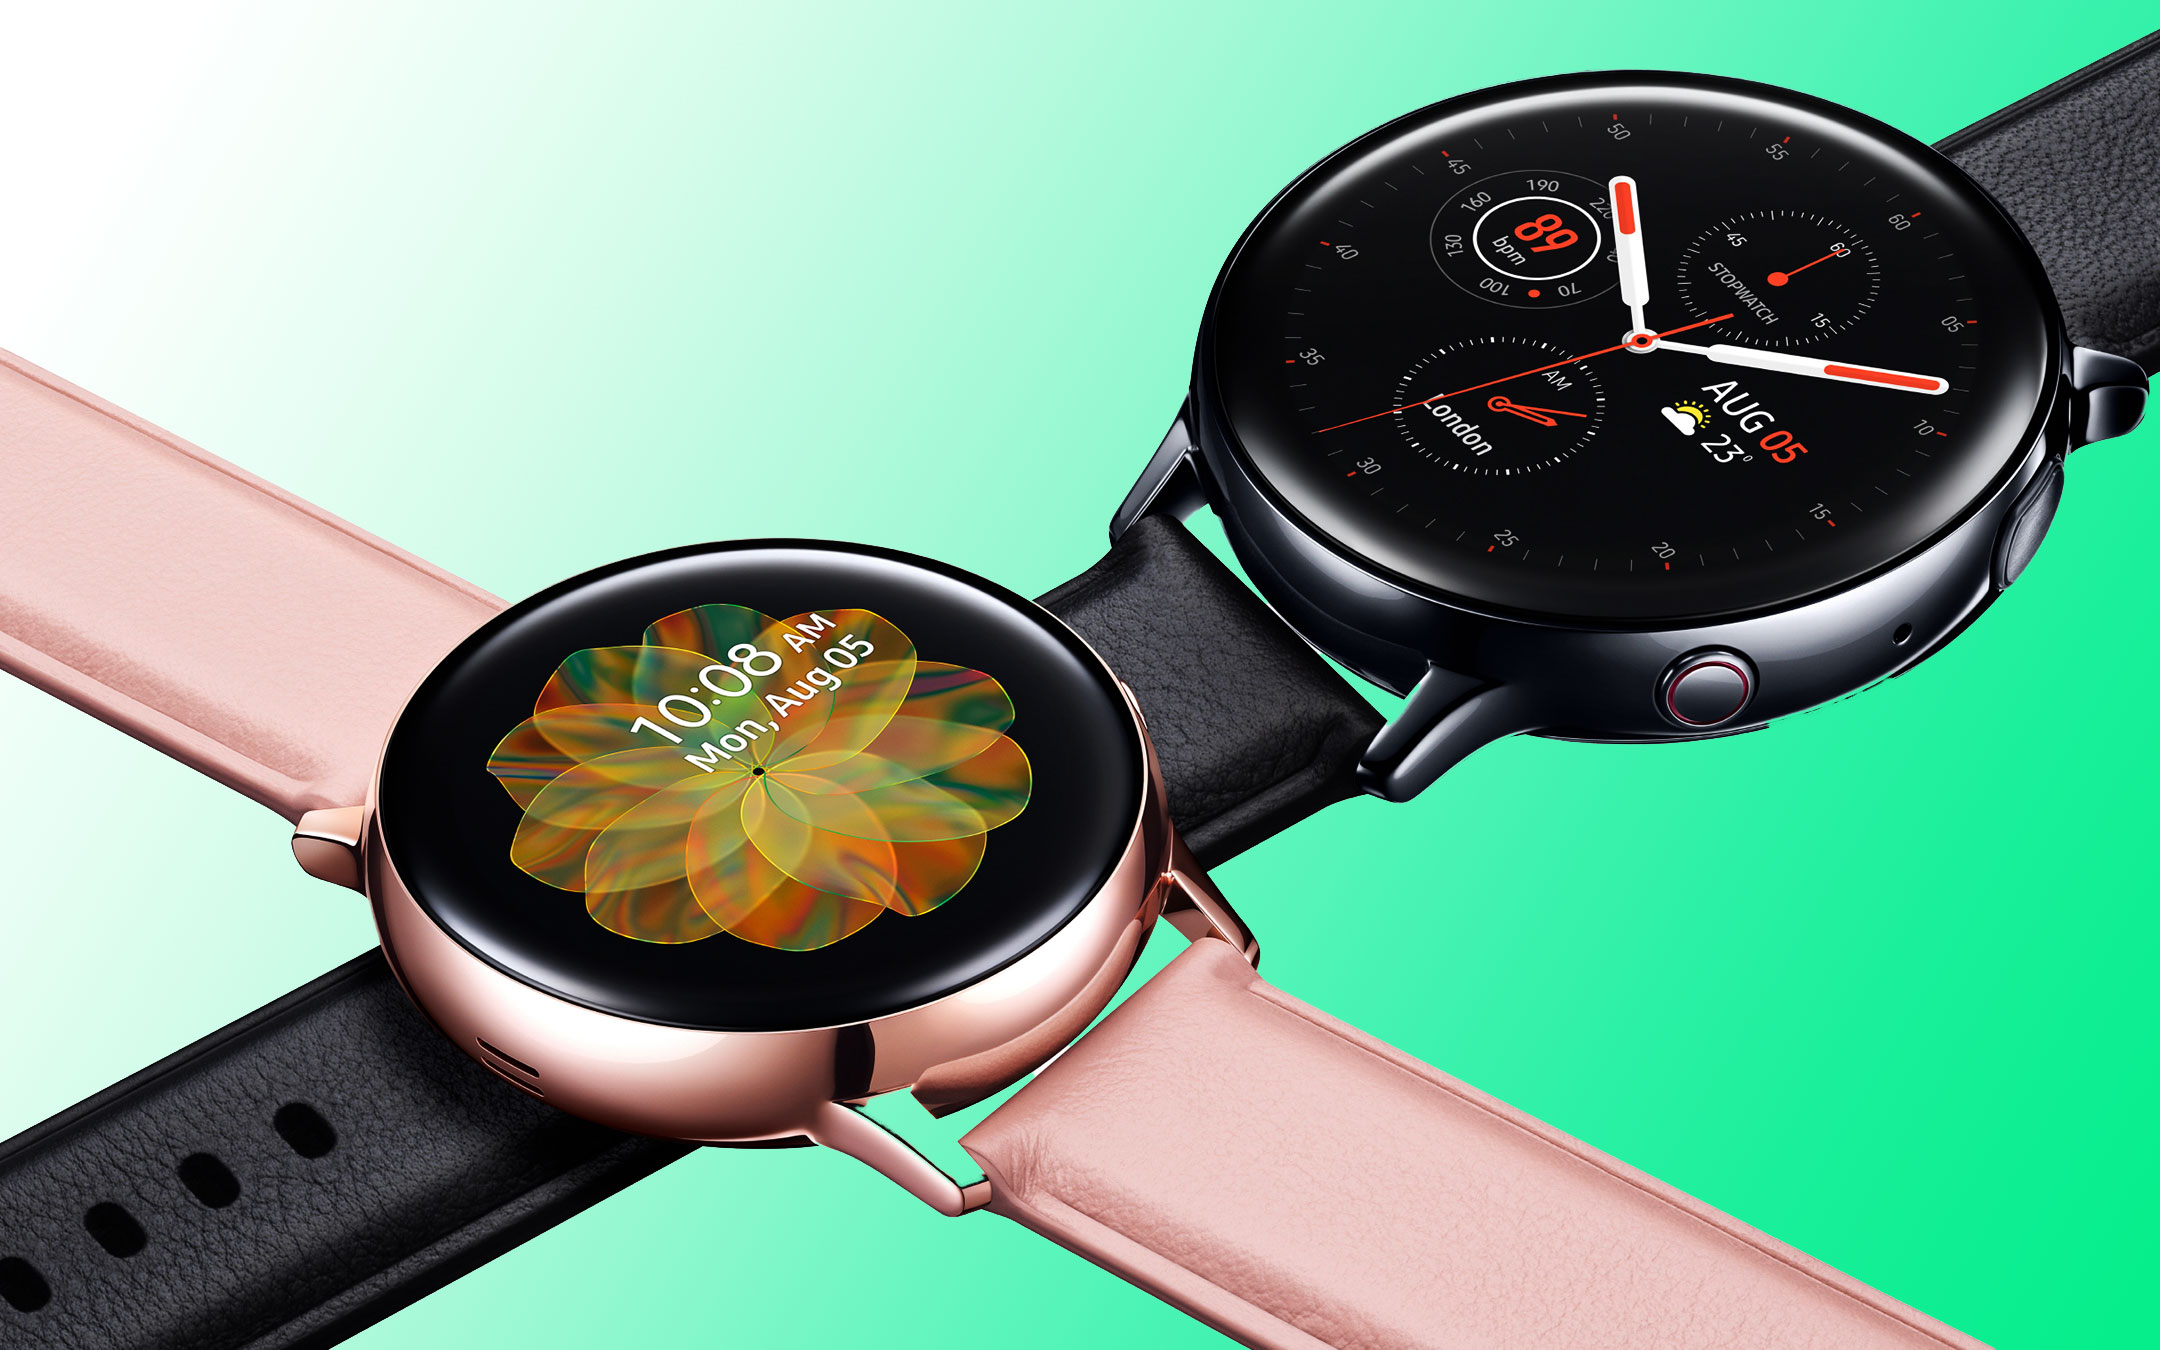 Samsung Galaxy Watch 2 önümüzdeki ay tanıtılabilir